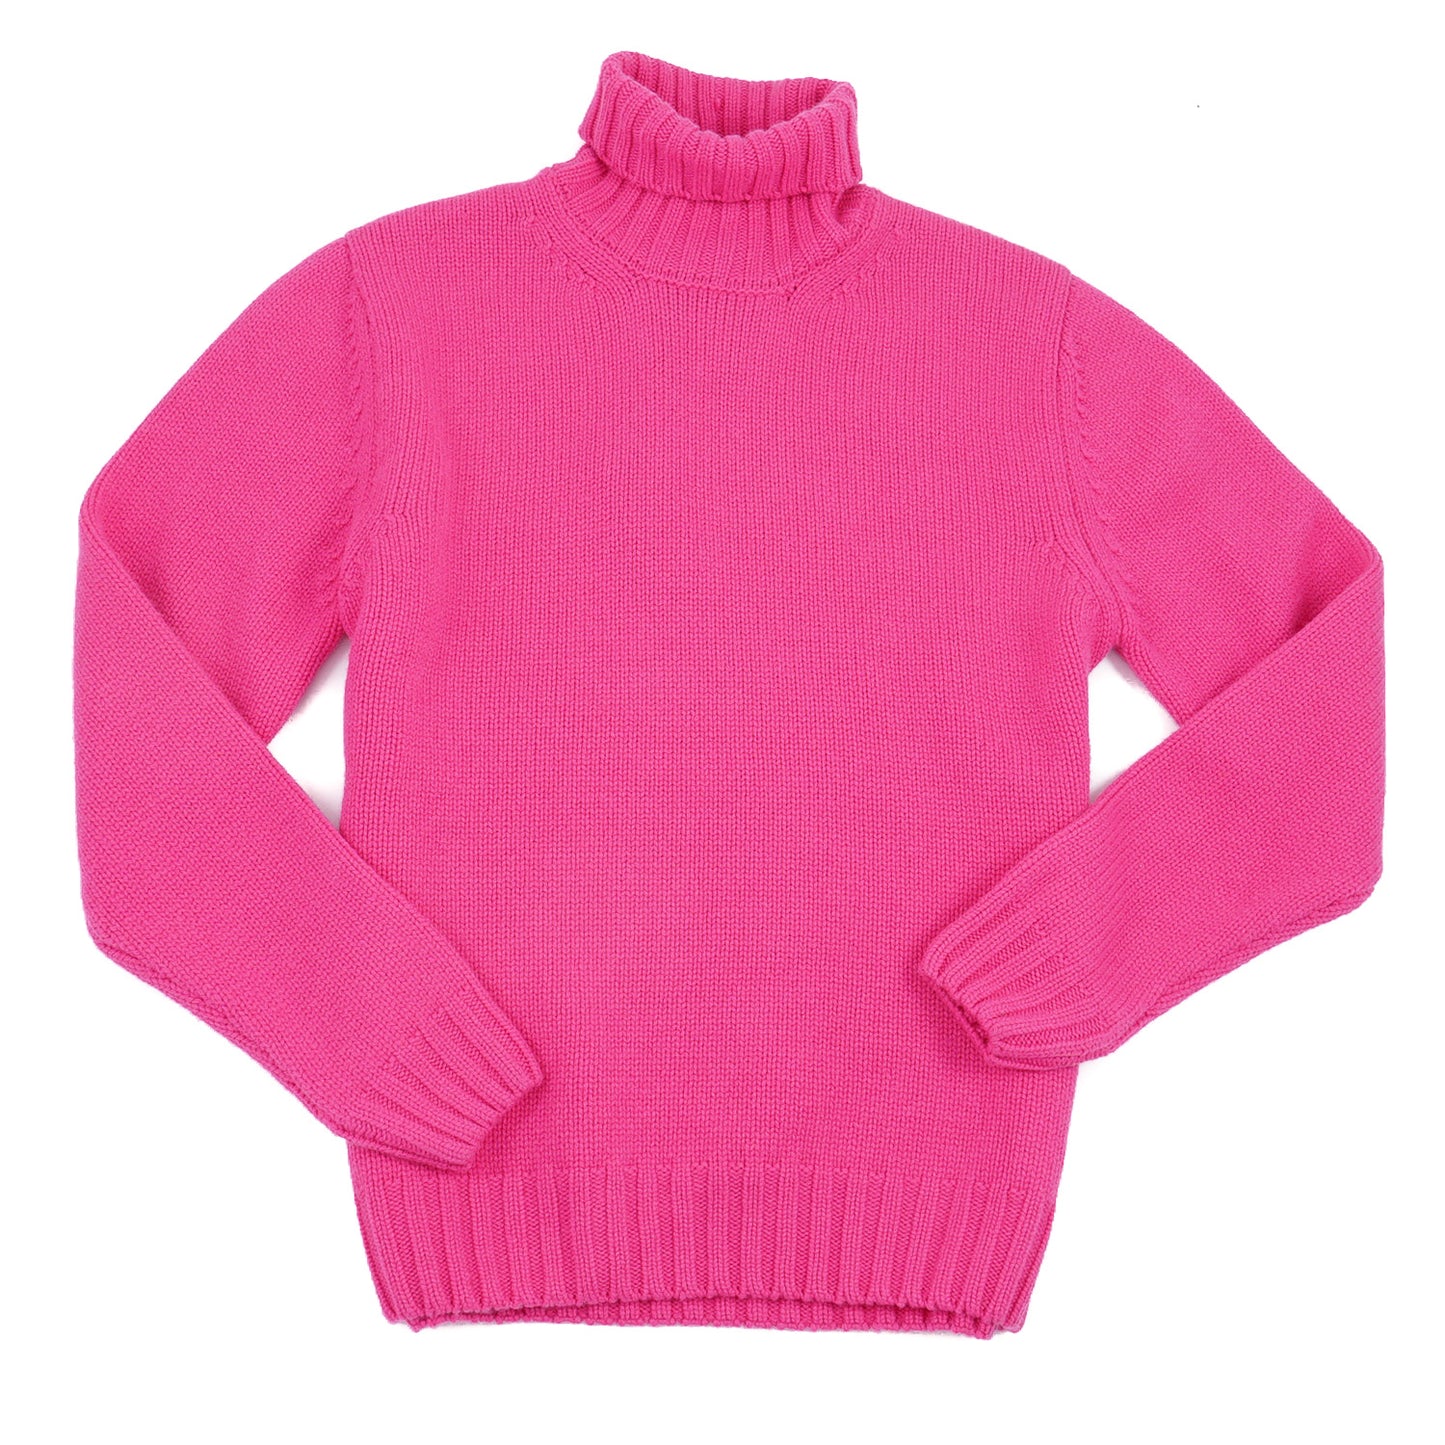 Drumohr Soft Knit Cashmere Sweater - Top Shelf Apparel